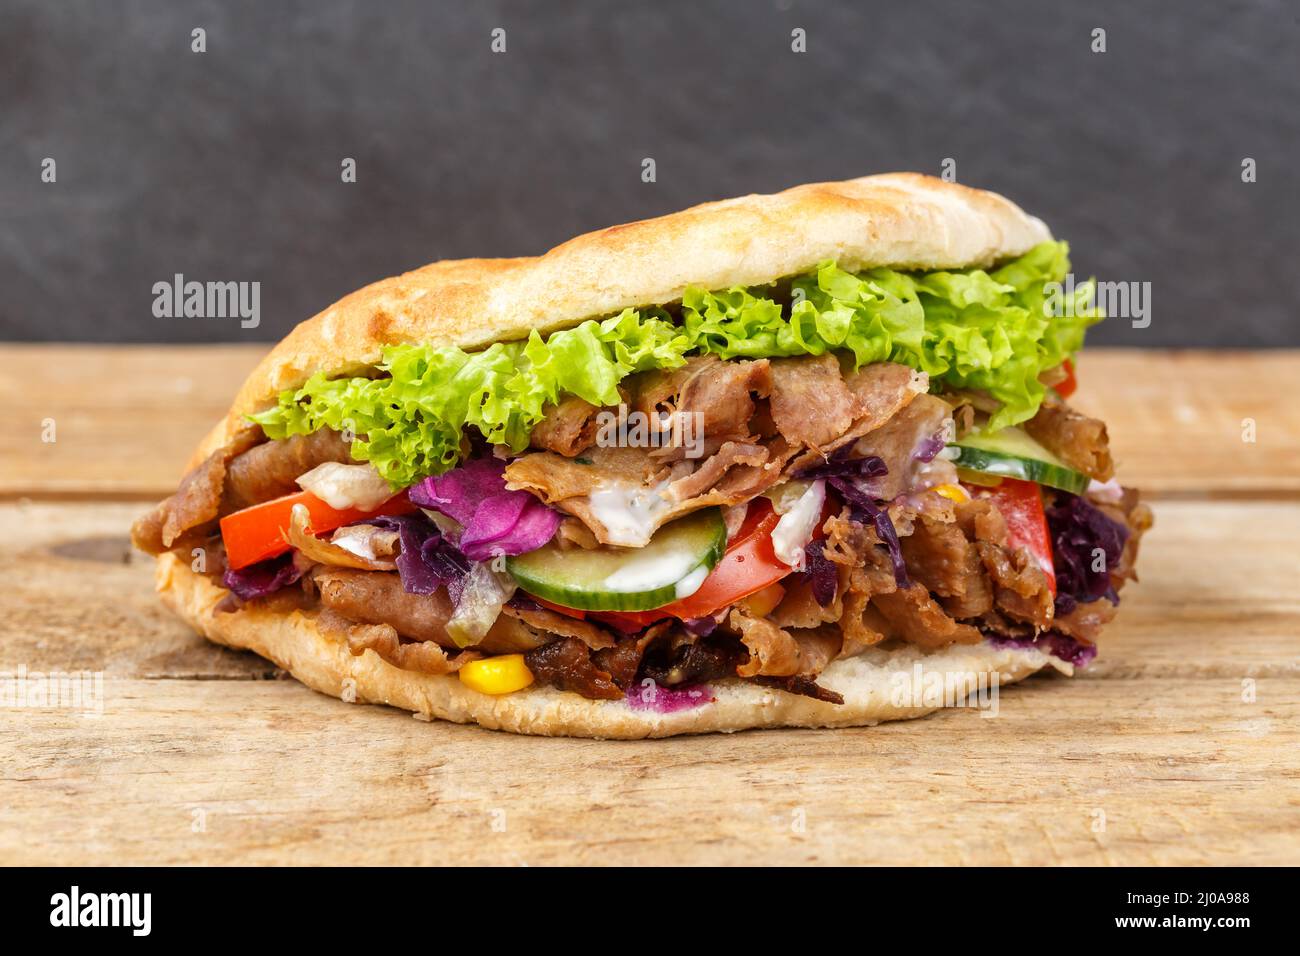 Döner Kebab Doner Kebap fast food snack in flatbread on a wooden board Stock Photo